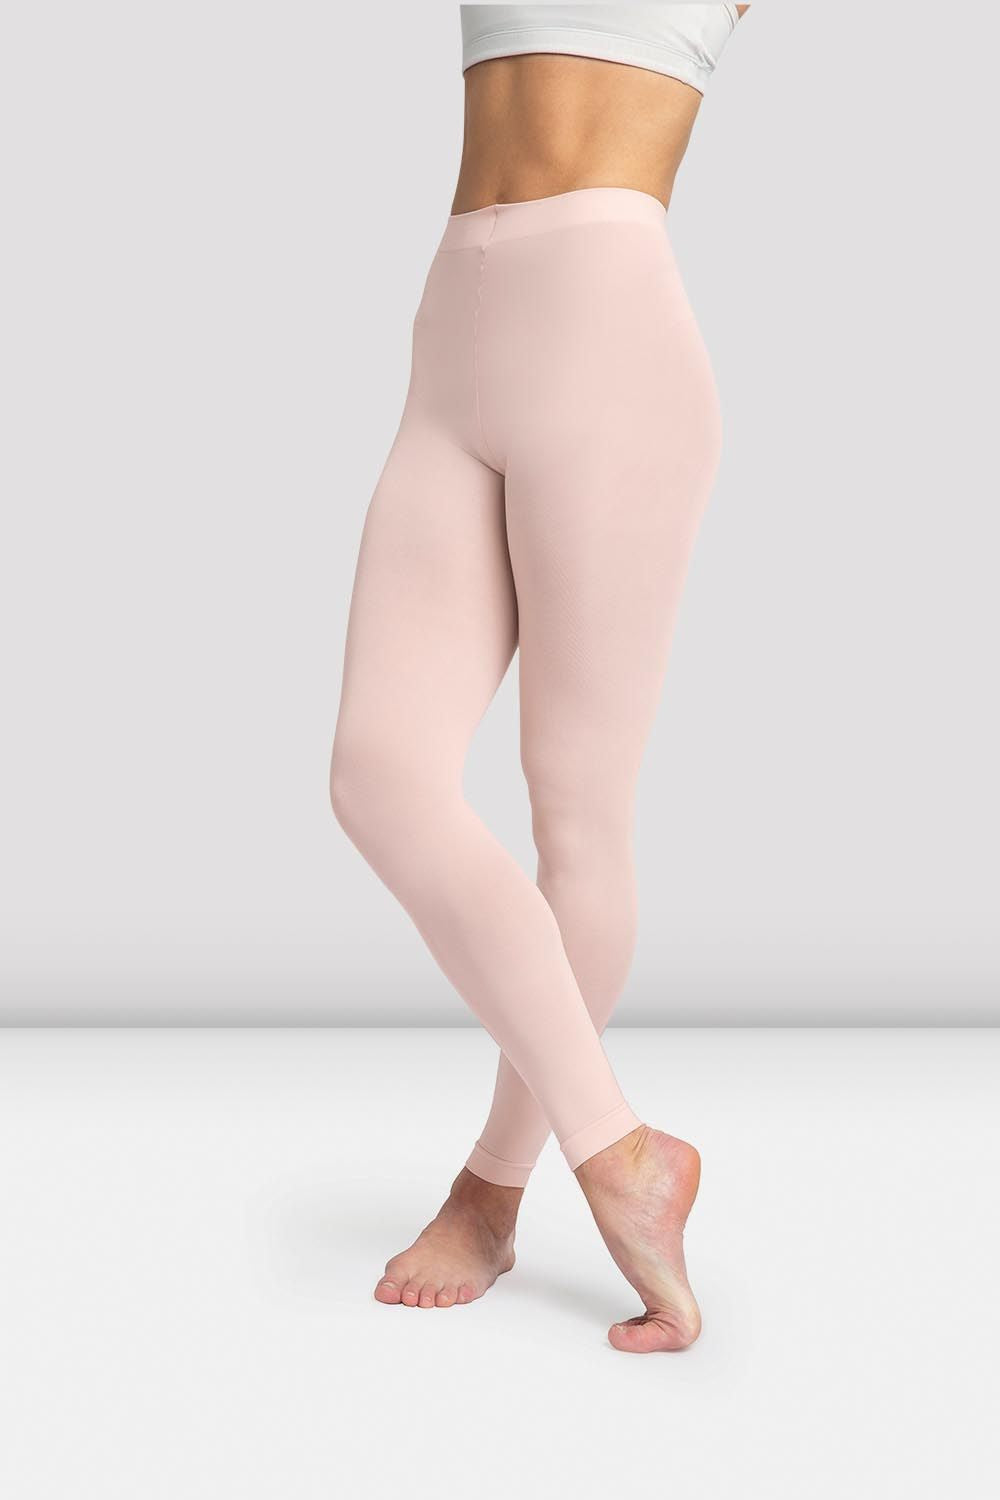 Bloch T0985G Contoursoft Footless girls tights - Dance Plus Miami